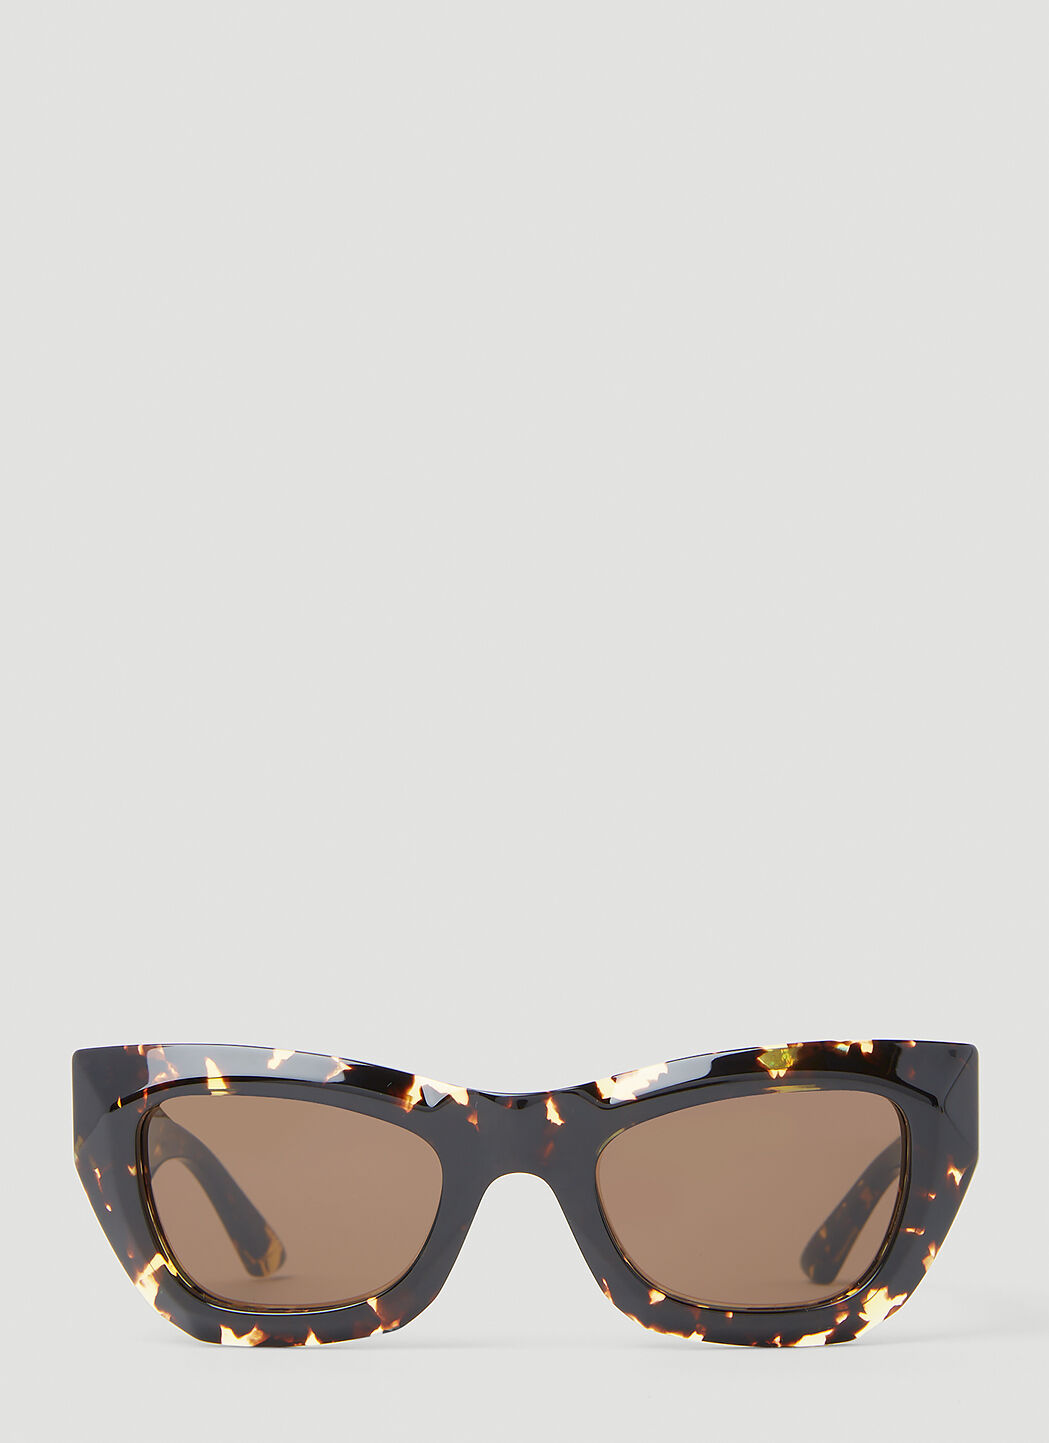 Gucci Tortoiseshell Cat Eye Sunglasses Khaki guc0253078